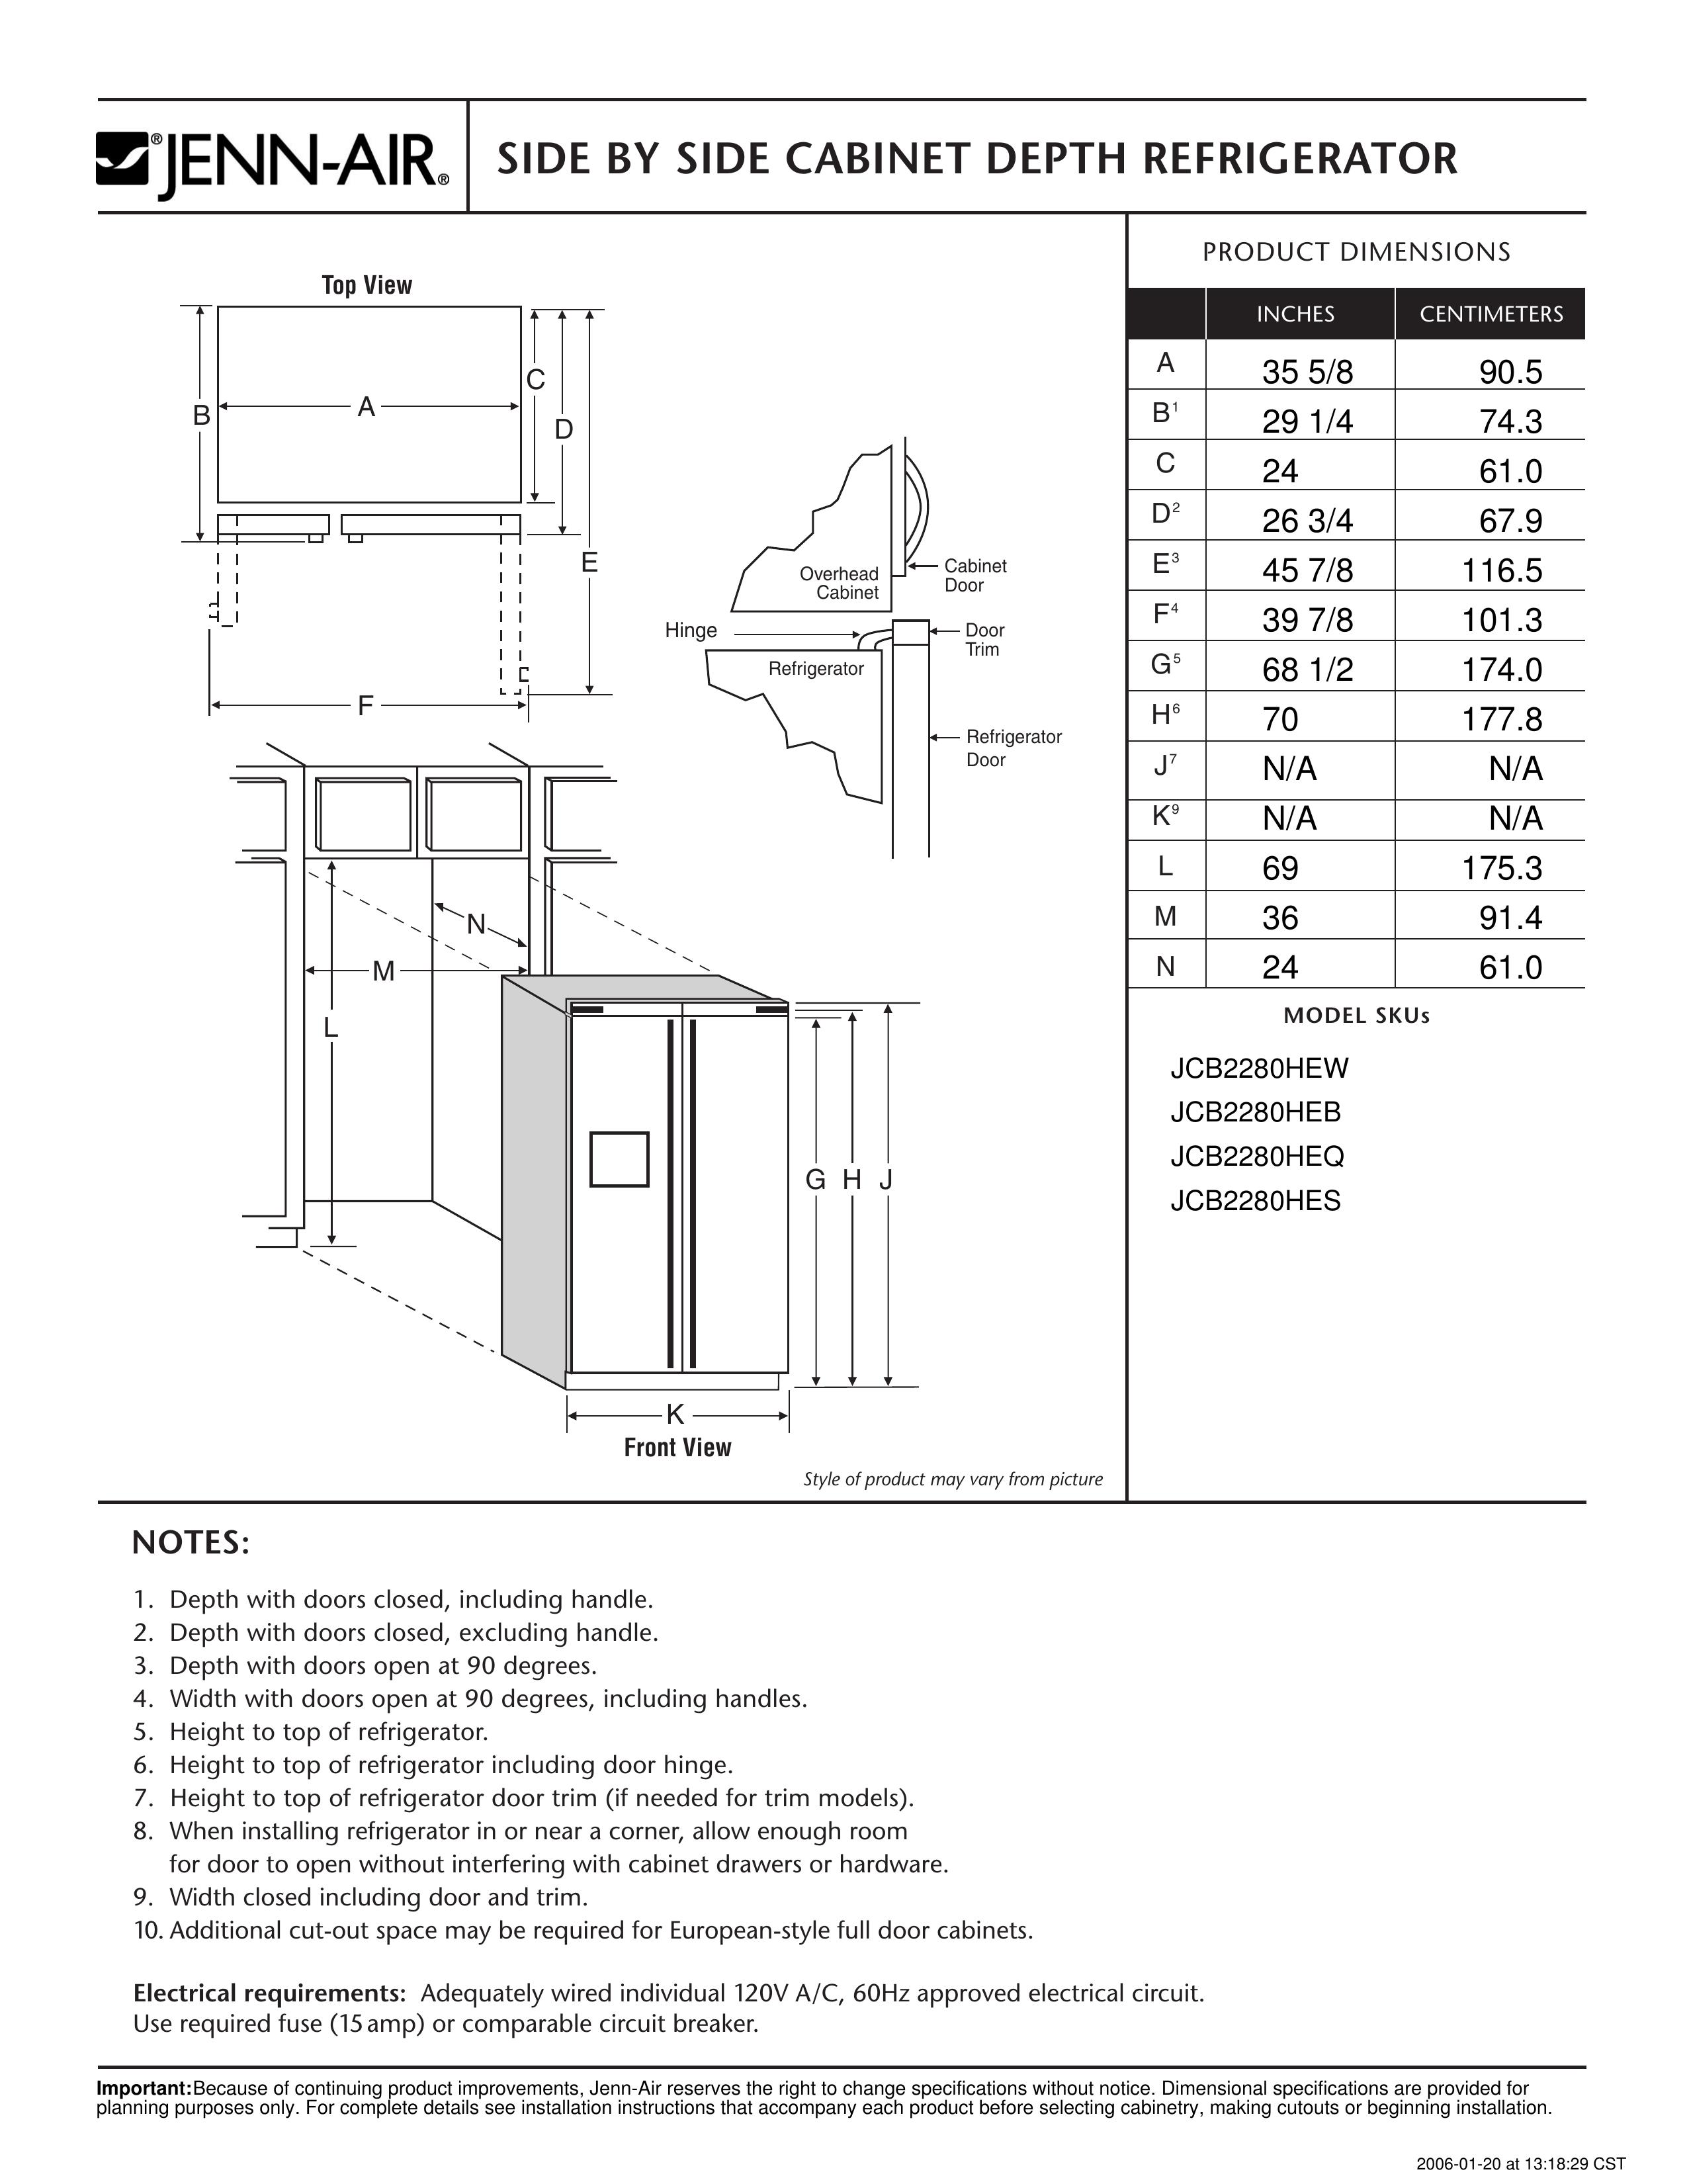 Jenn-Air JCB2280HEB Refrigerator User Manual